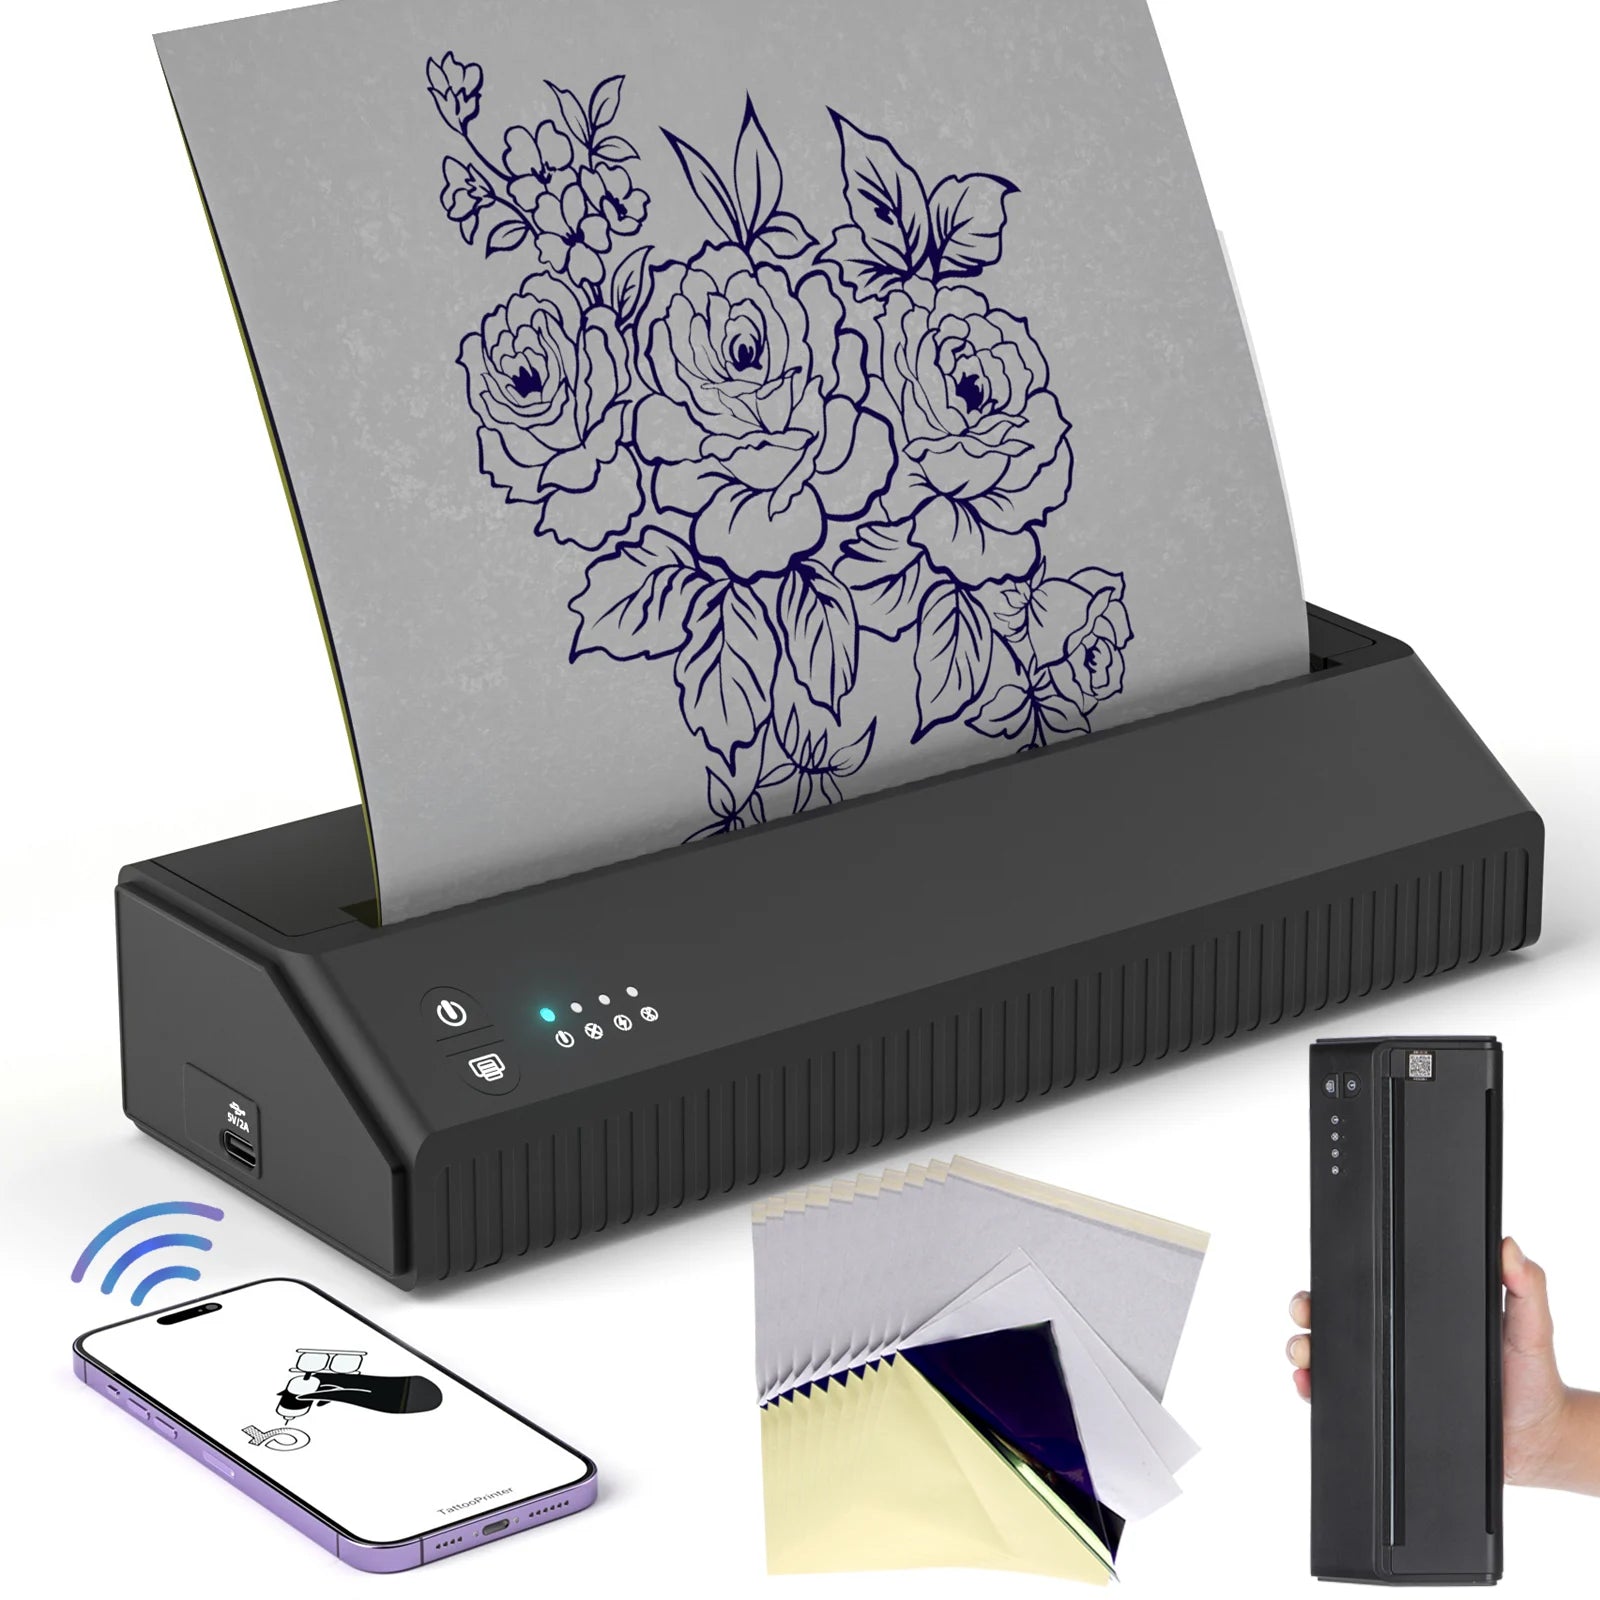 CNC 8008 Newest Version Bluetooth Tattoo Stencil Printer - Solong Tattoo  Supply